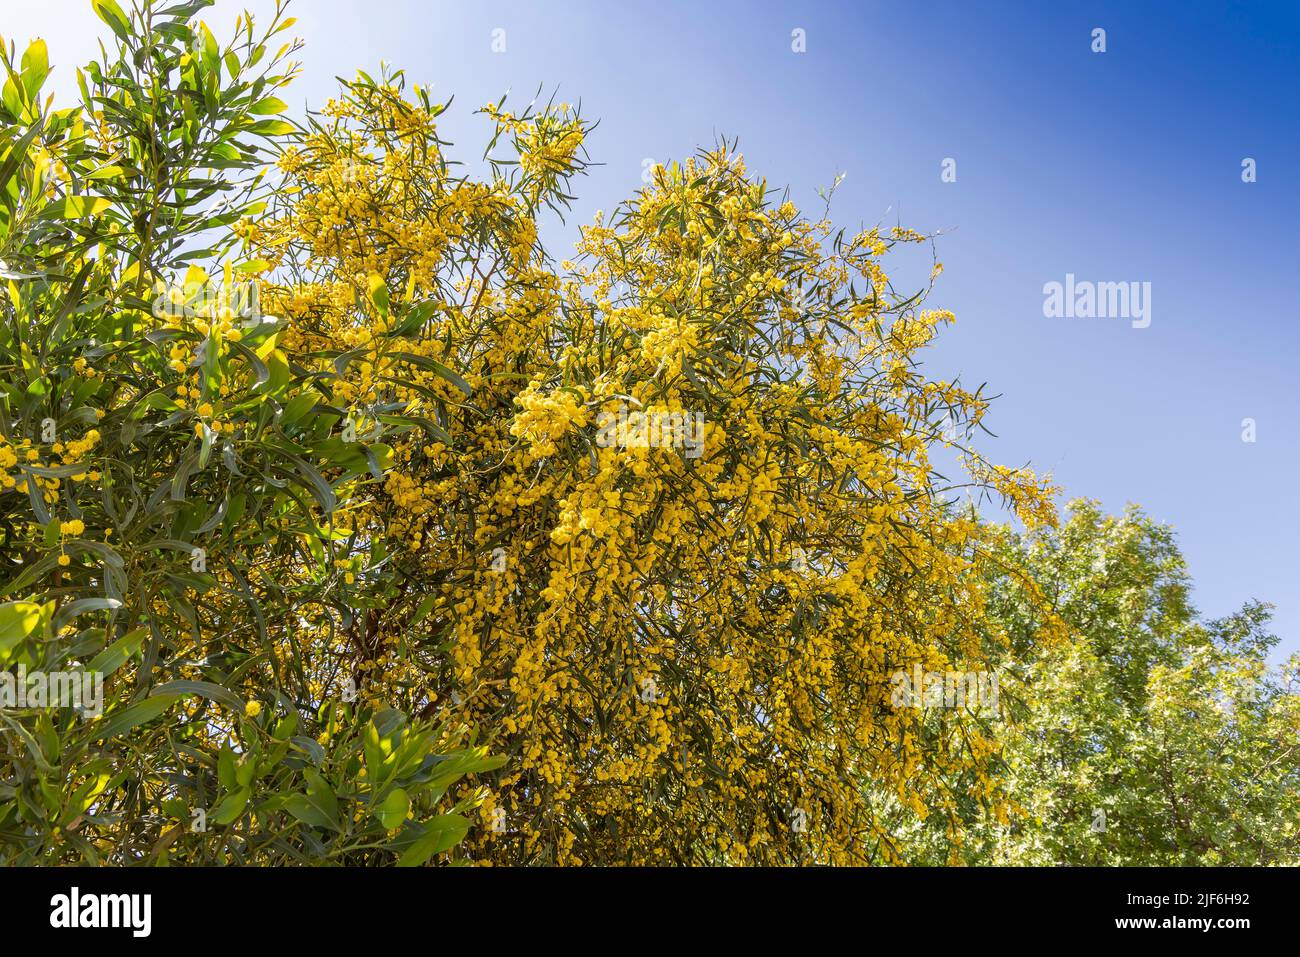 Bright yellow fluffy balls like flowers of Mimosa tree (Acacia dealbata) also called Persian silk tree. Stock Photo